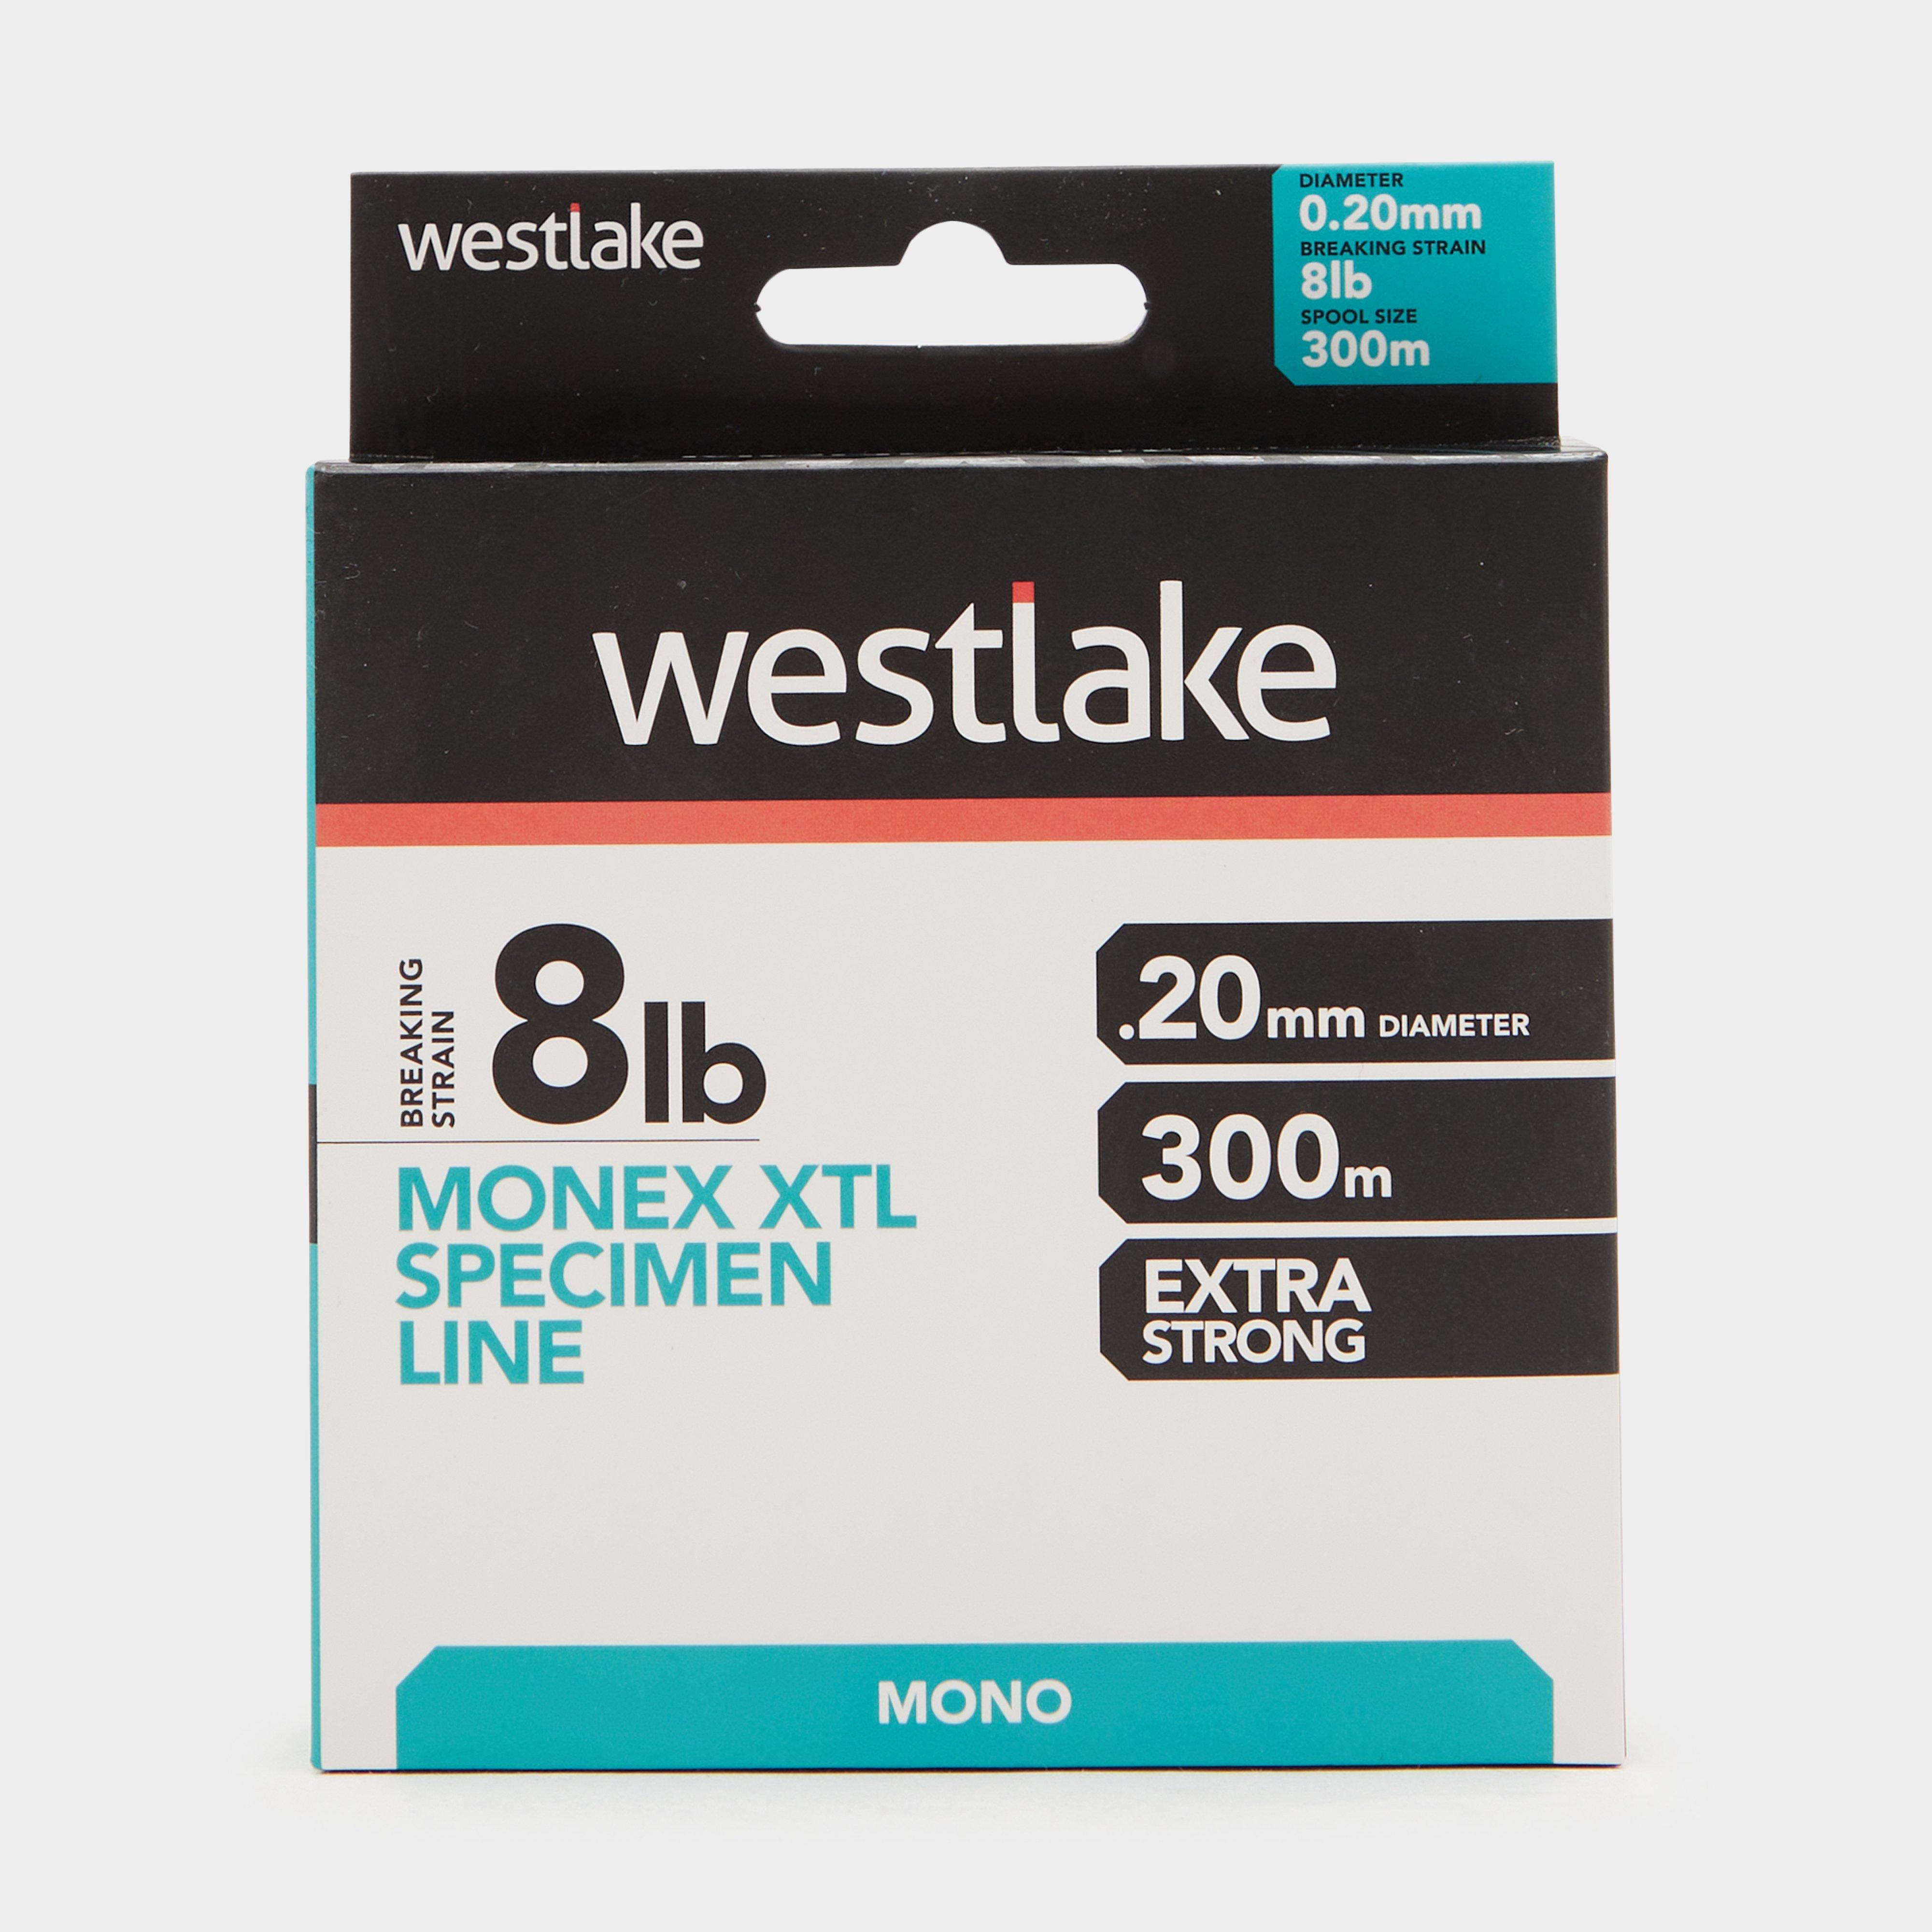 Westlake Xl Specimen Mono 8lb 26mm 300m - Multi/26mm  Multi/26mm